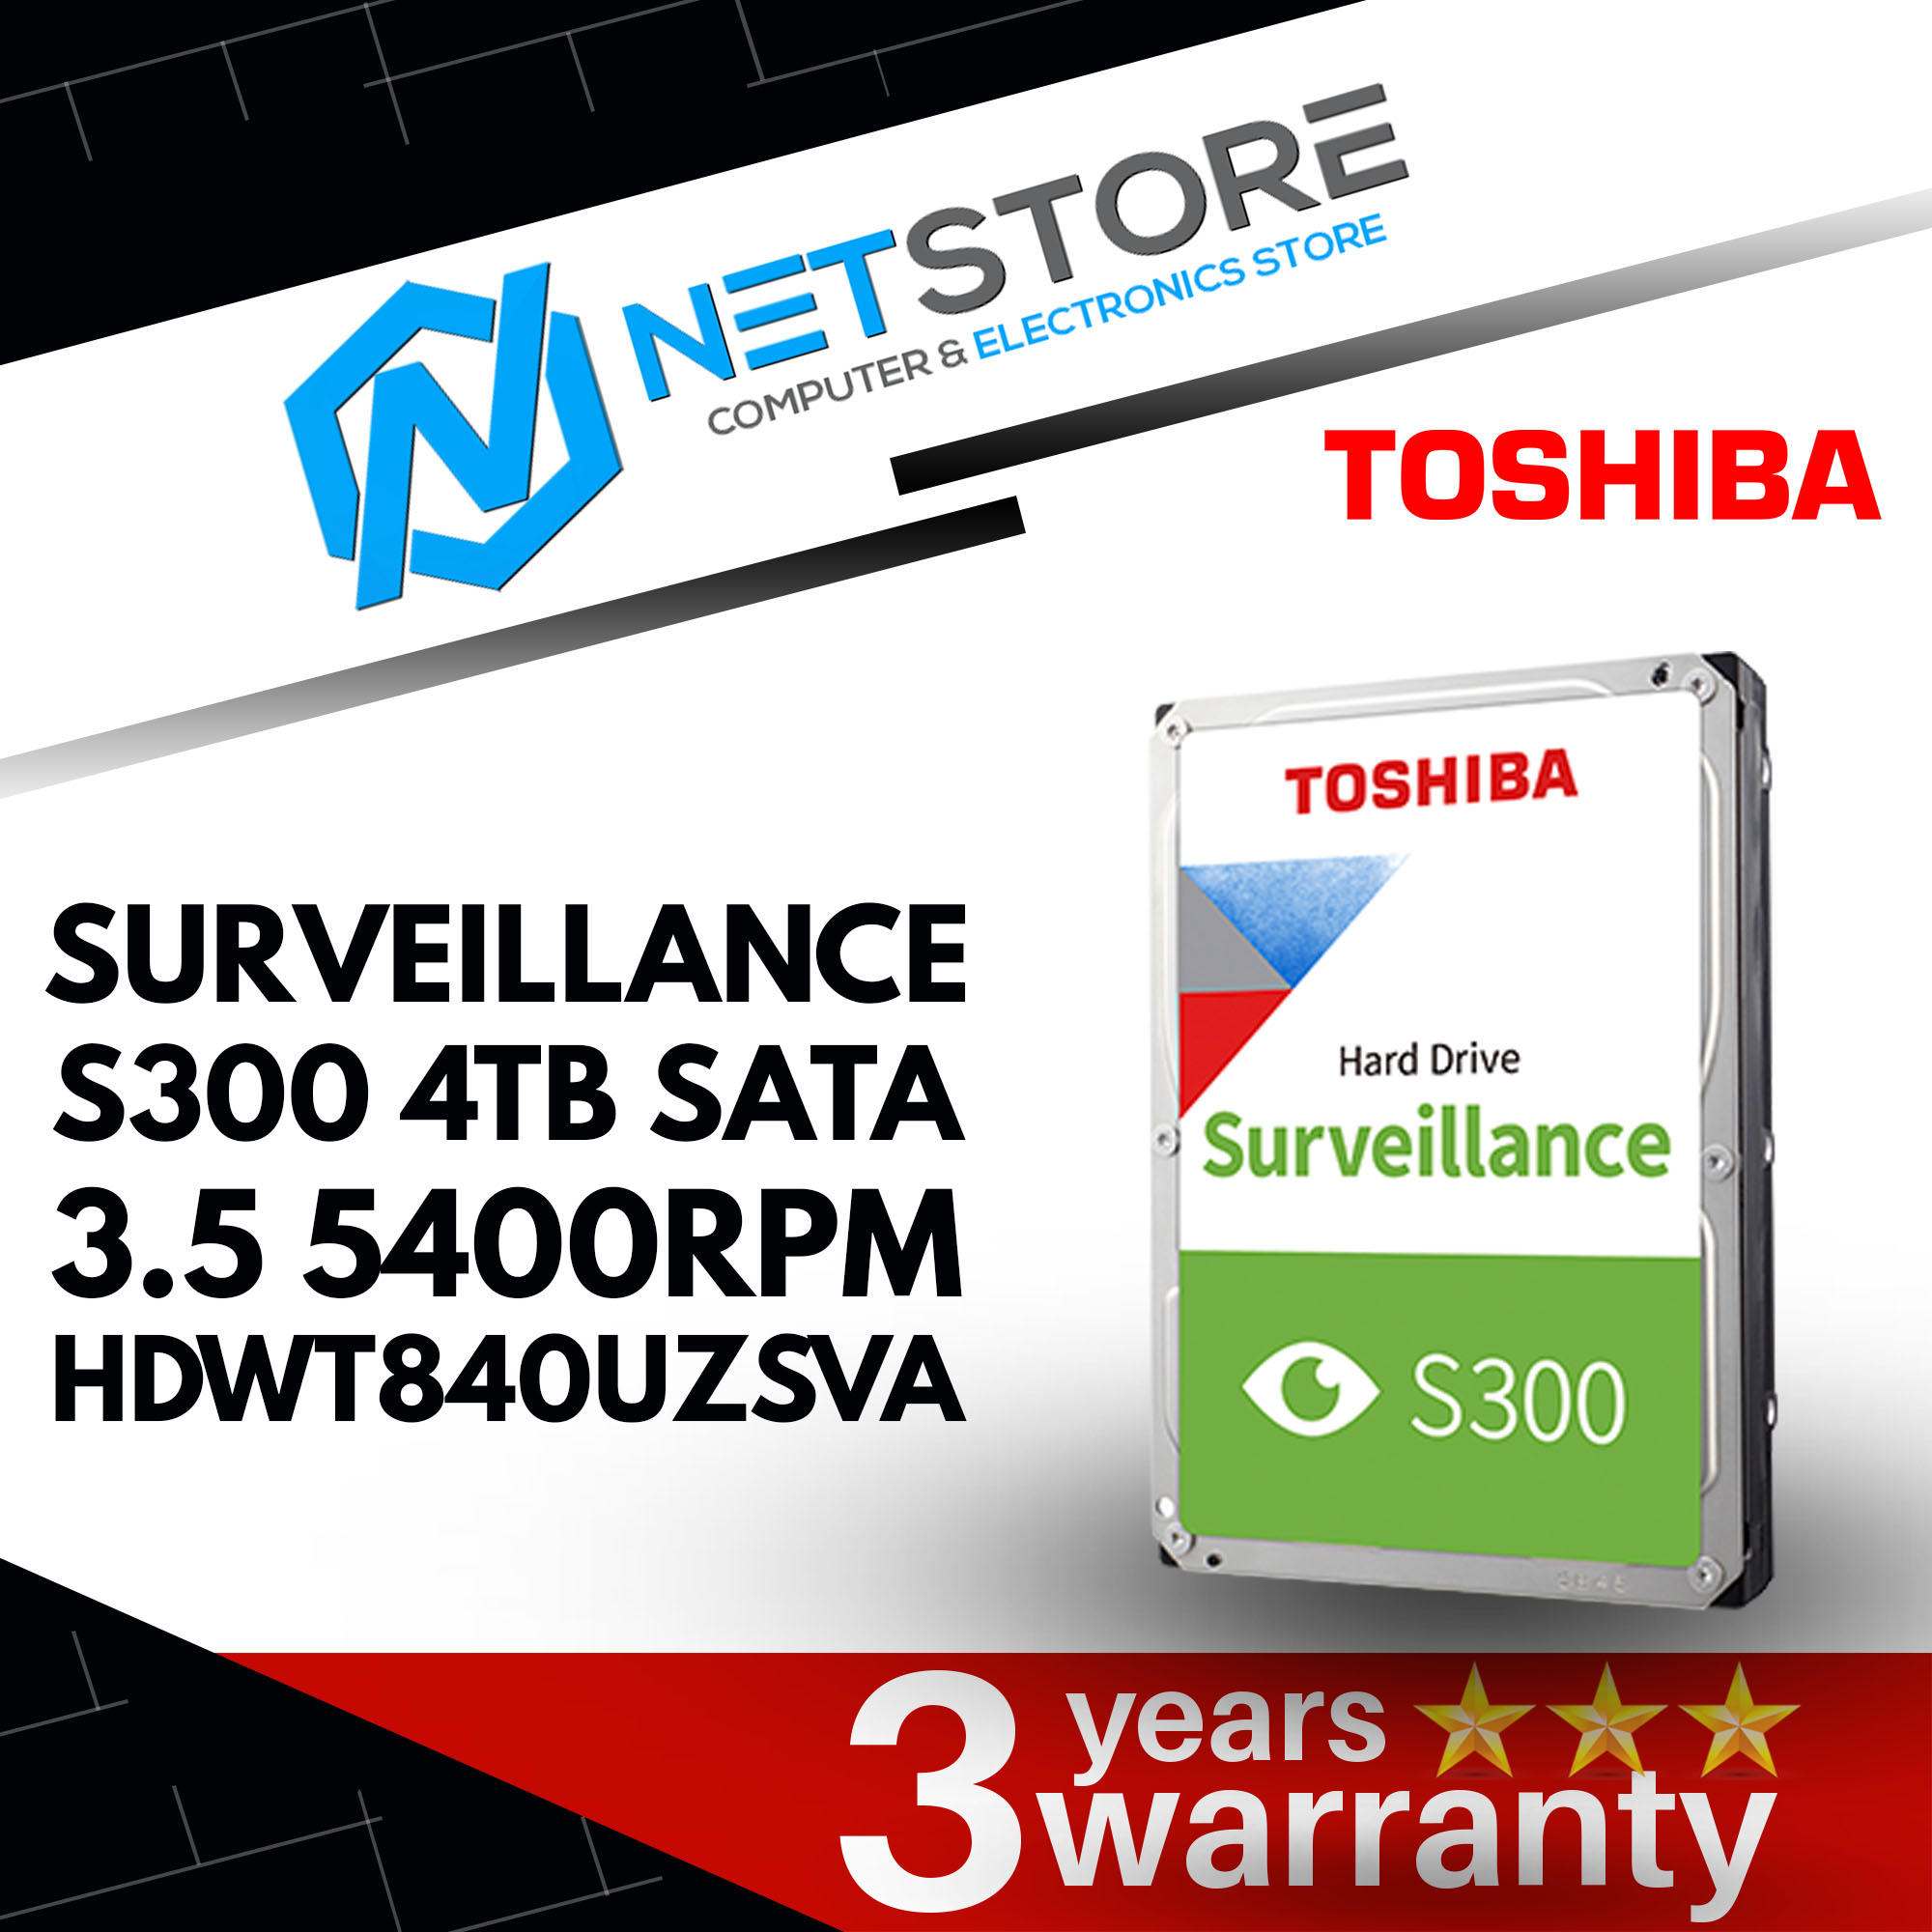 TOSHIBA SURVEILLANCE S300 4TB SATA 3.5 5400RPM - HDWT840UZSVA